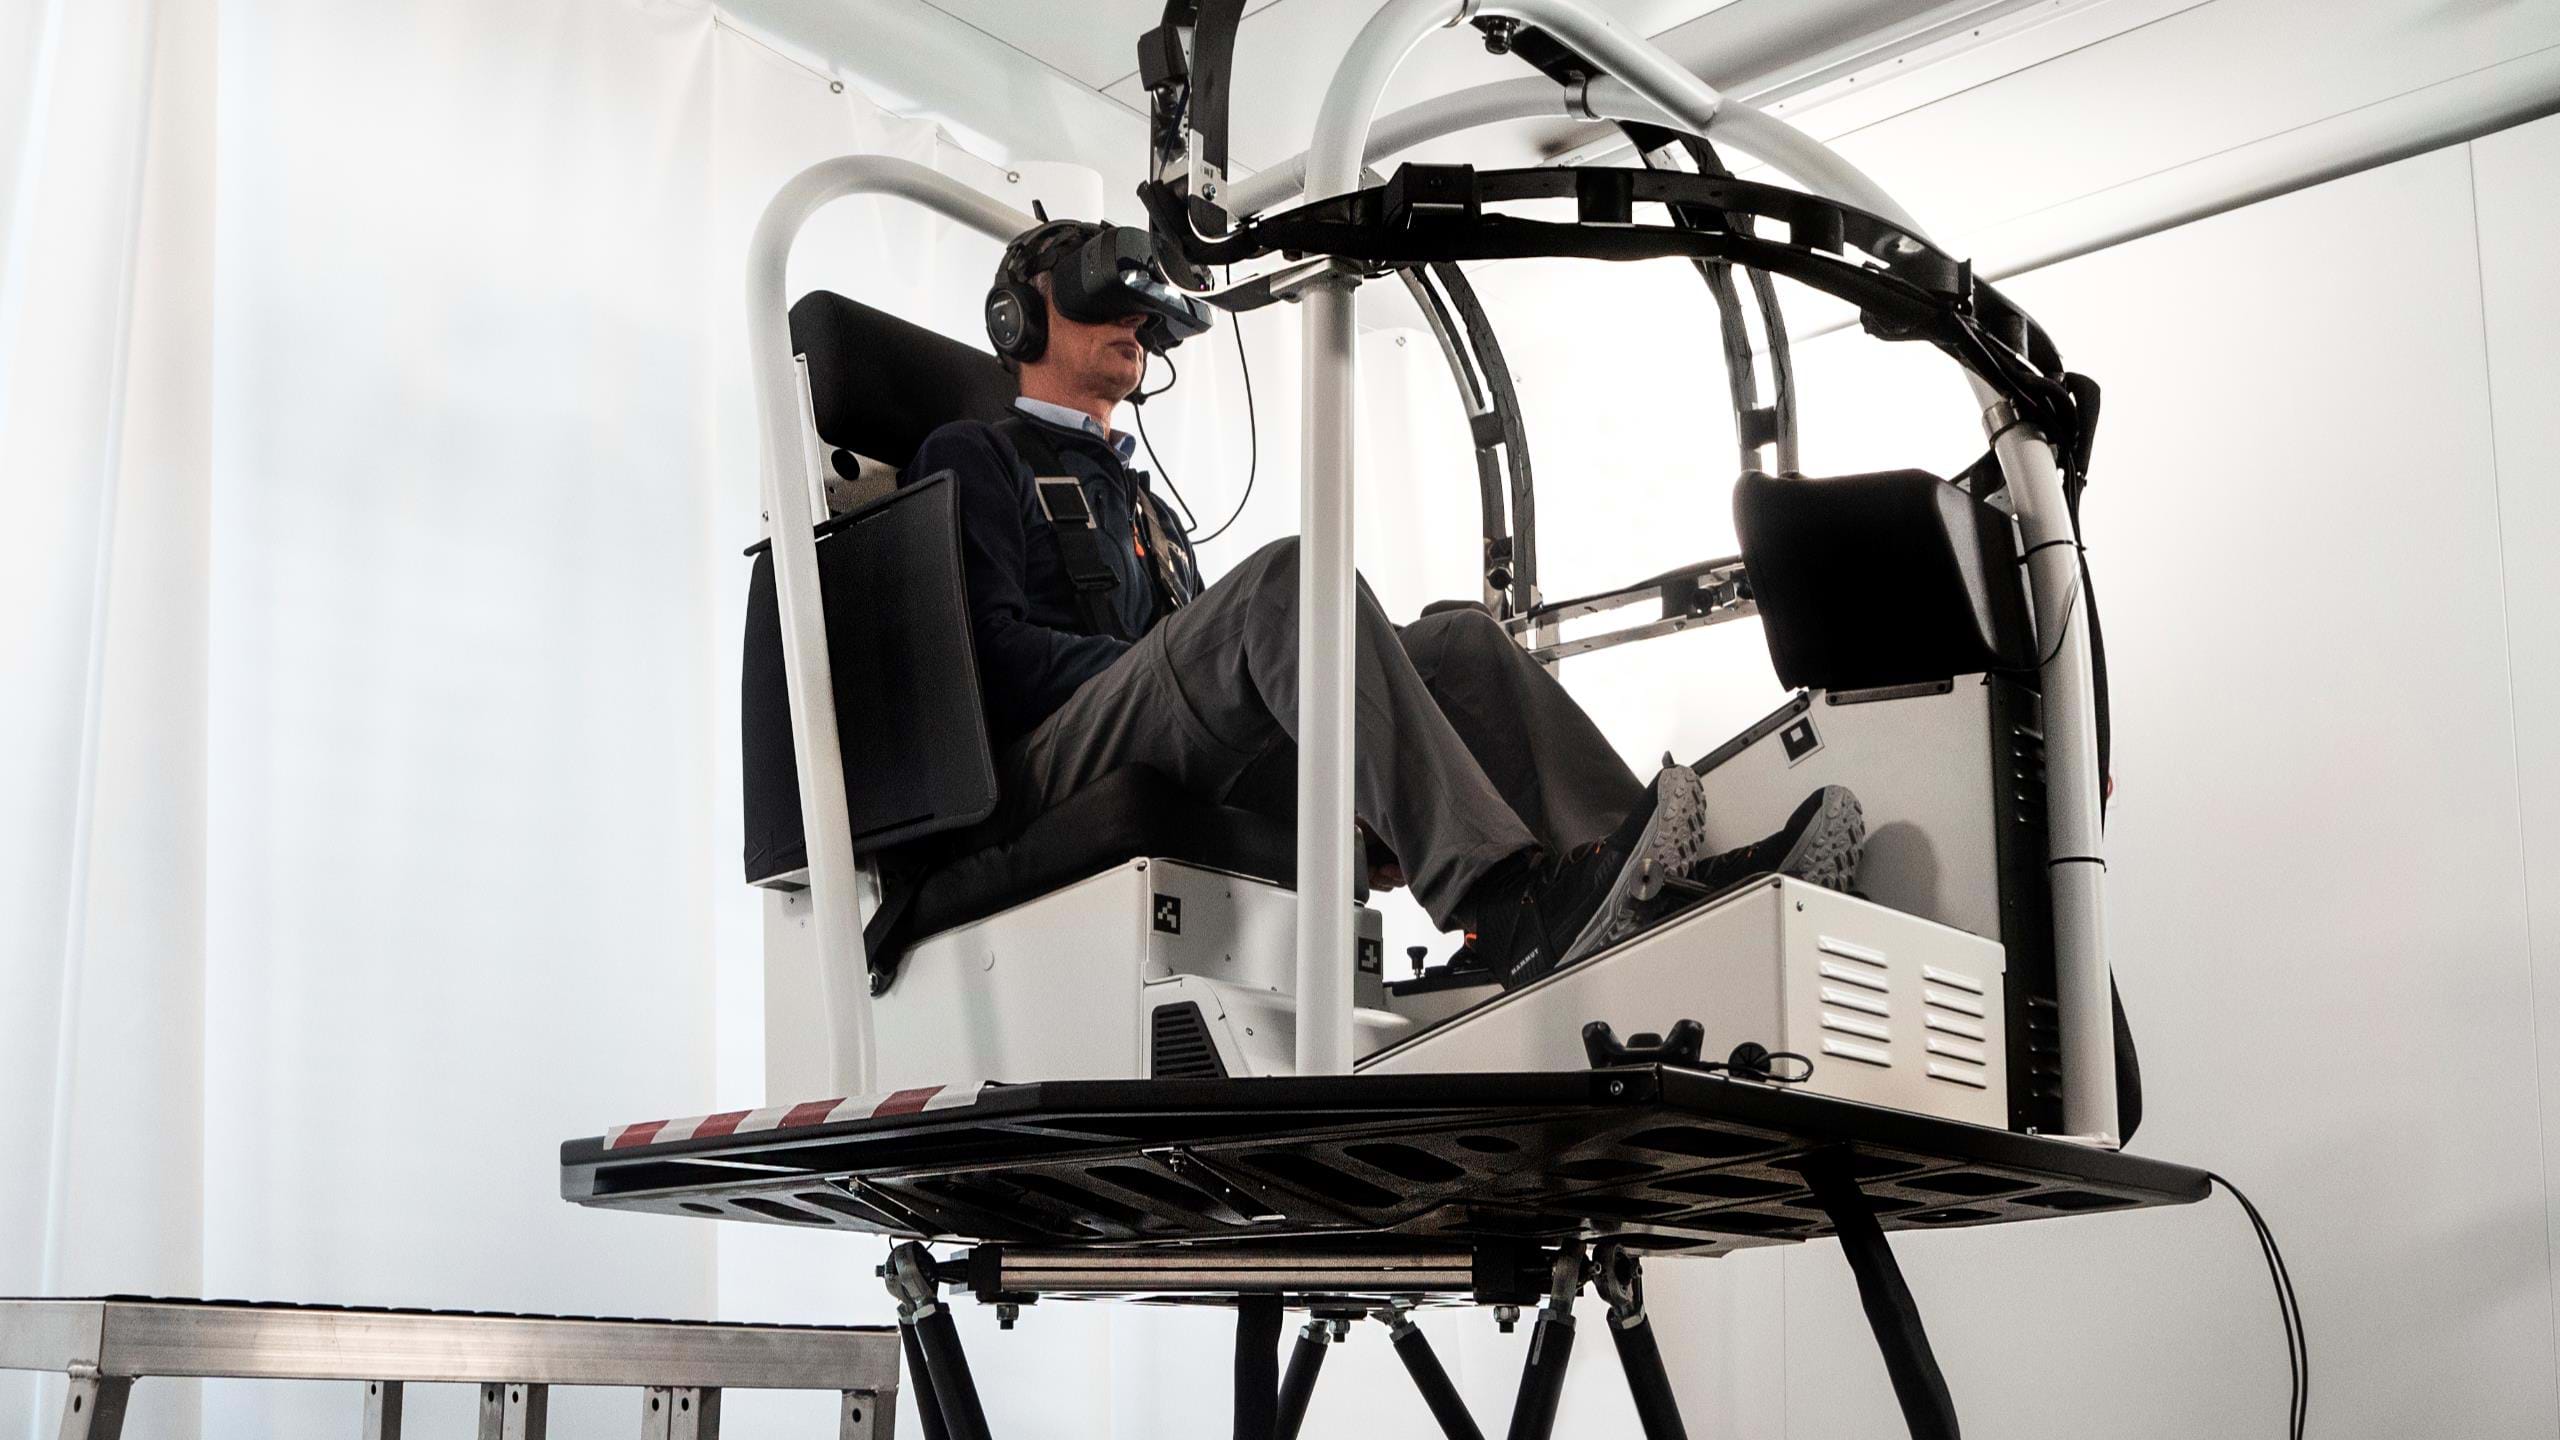 EASA certifies VRM Switzerland’s VR training system for pilot training, using Aerofly FS2